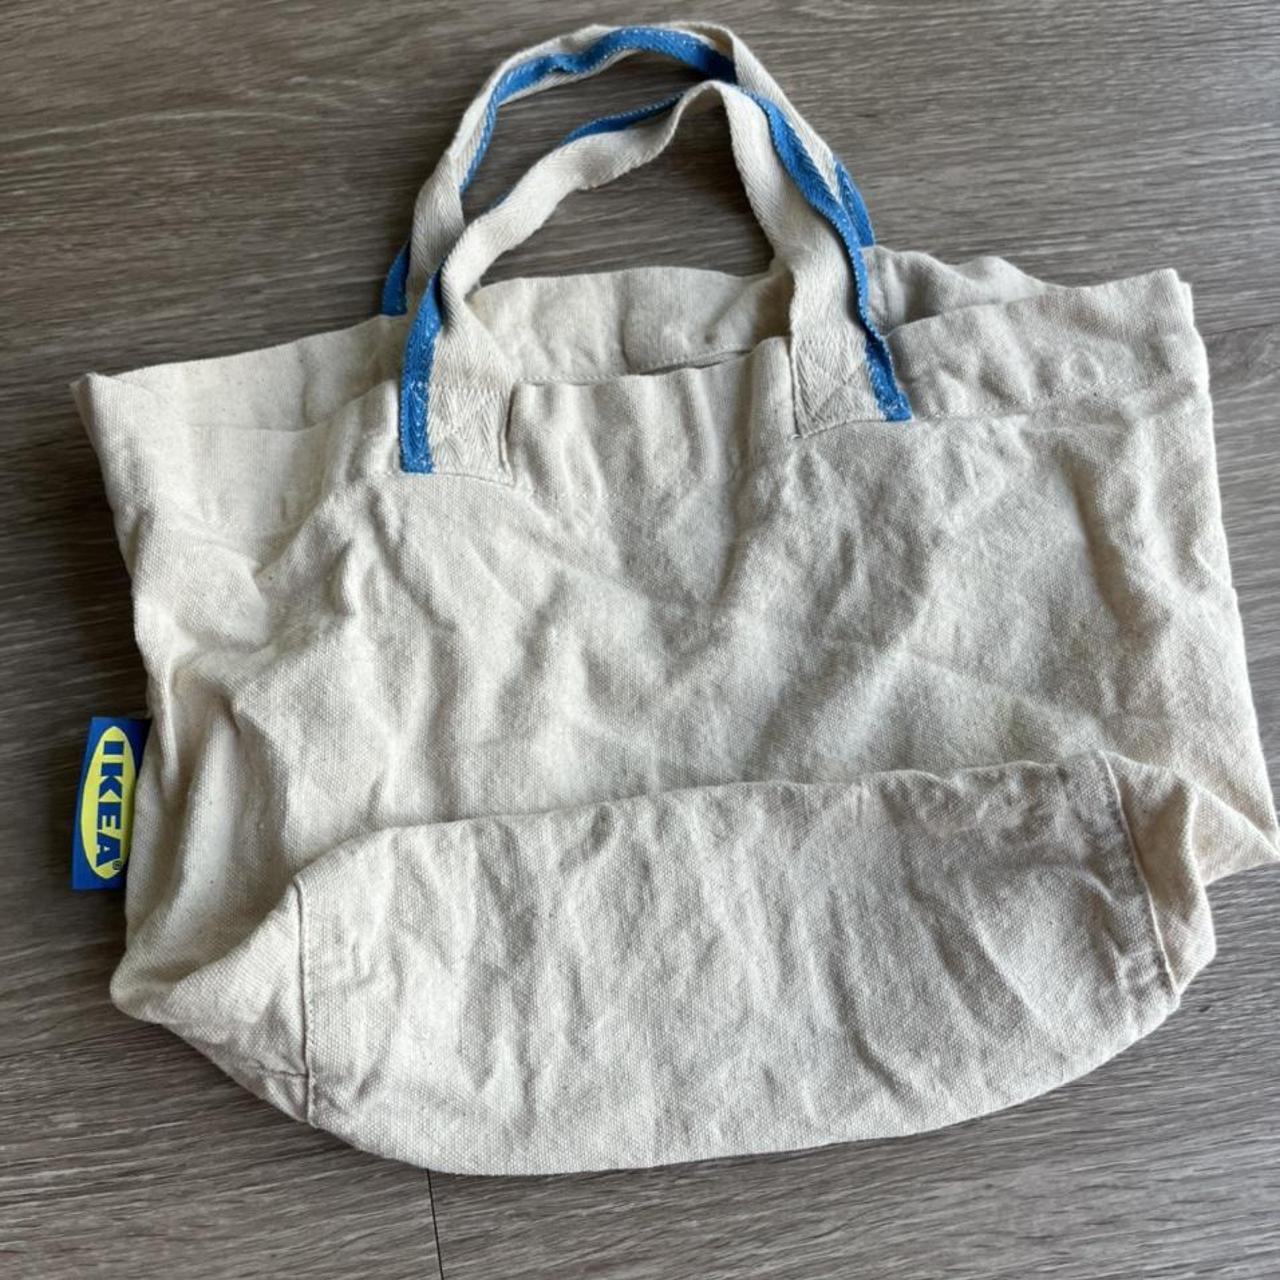 IKEA Women's Cream and Blue Bag